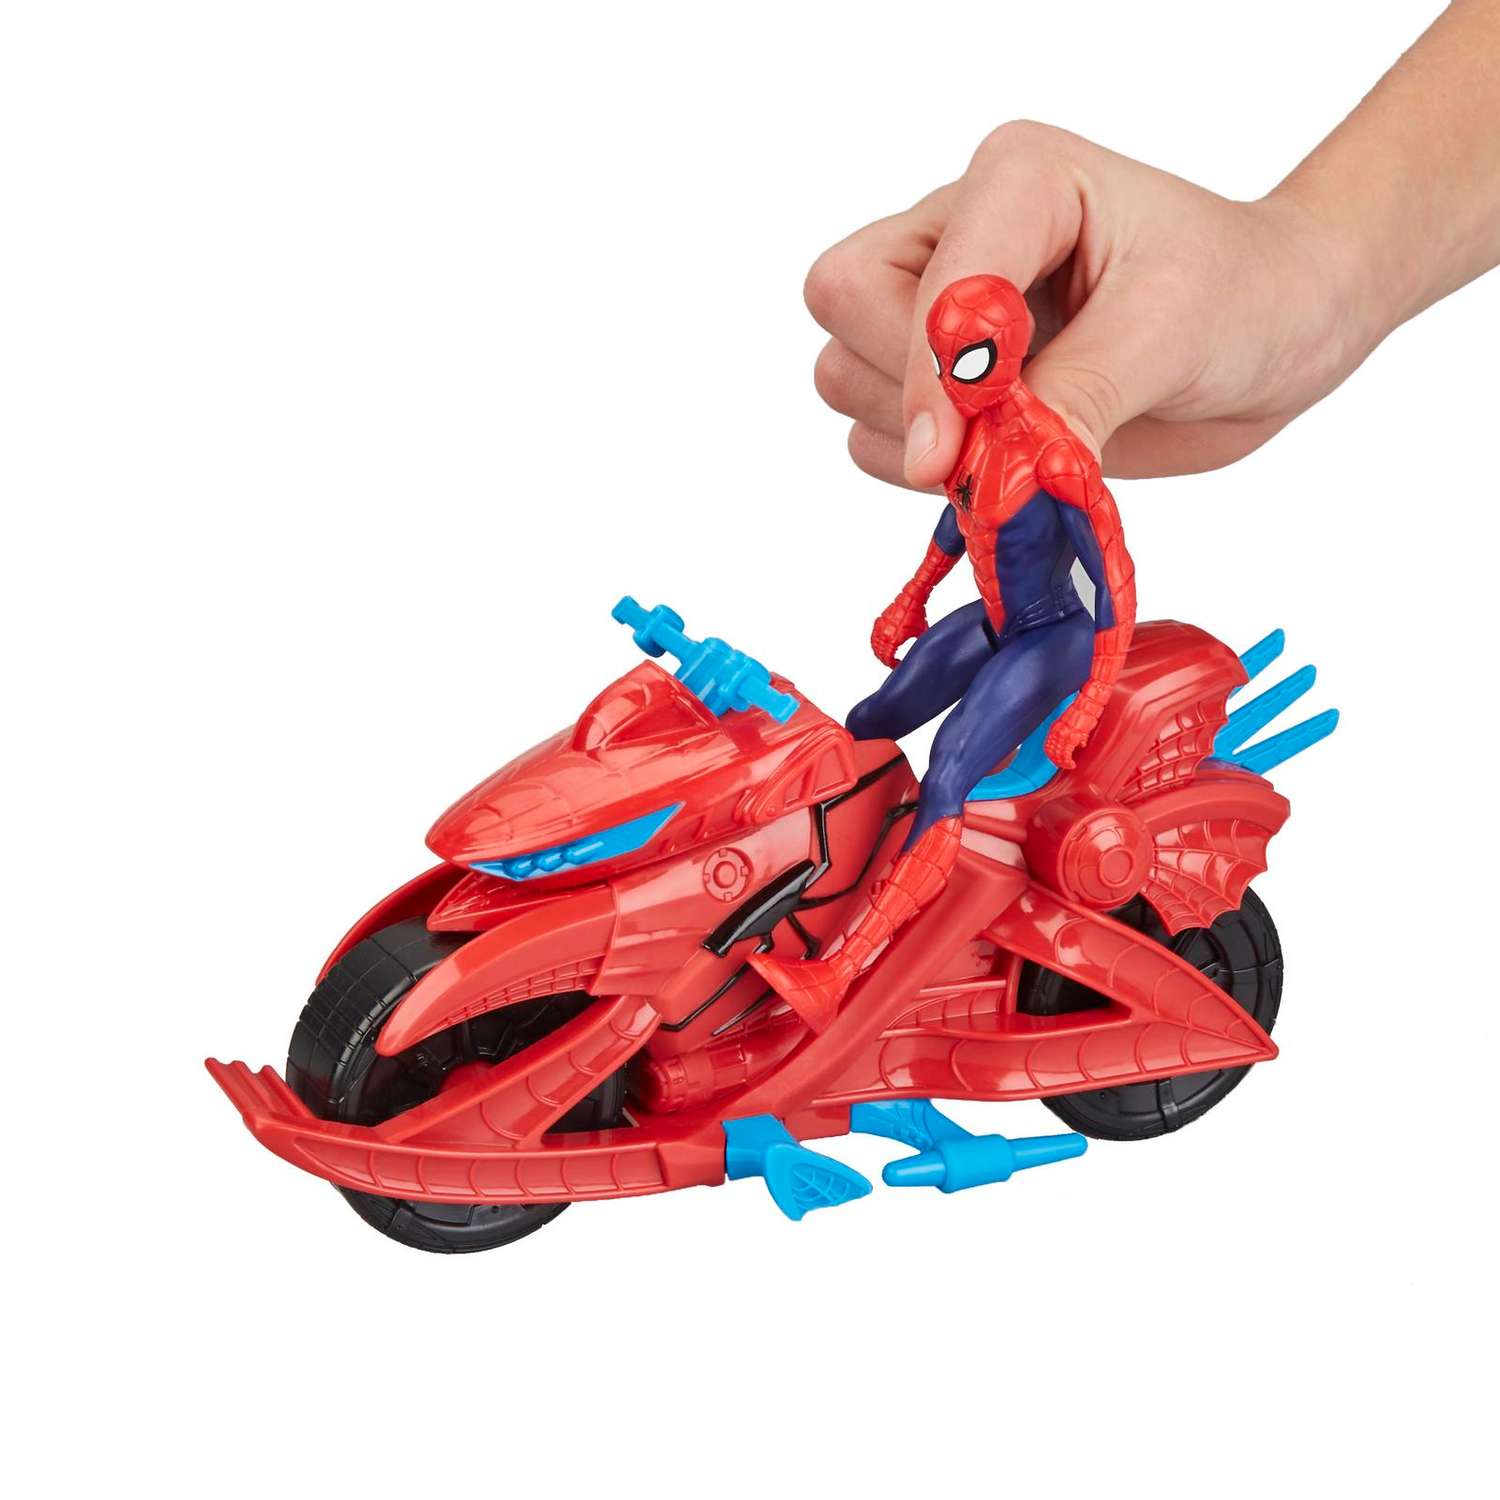 Фигурка Человек-Паук (Spider-man) Человек-паук с транспортом E3368EU4 - фото 7